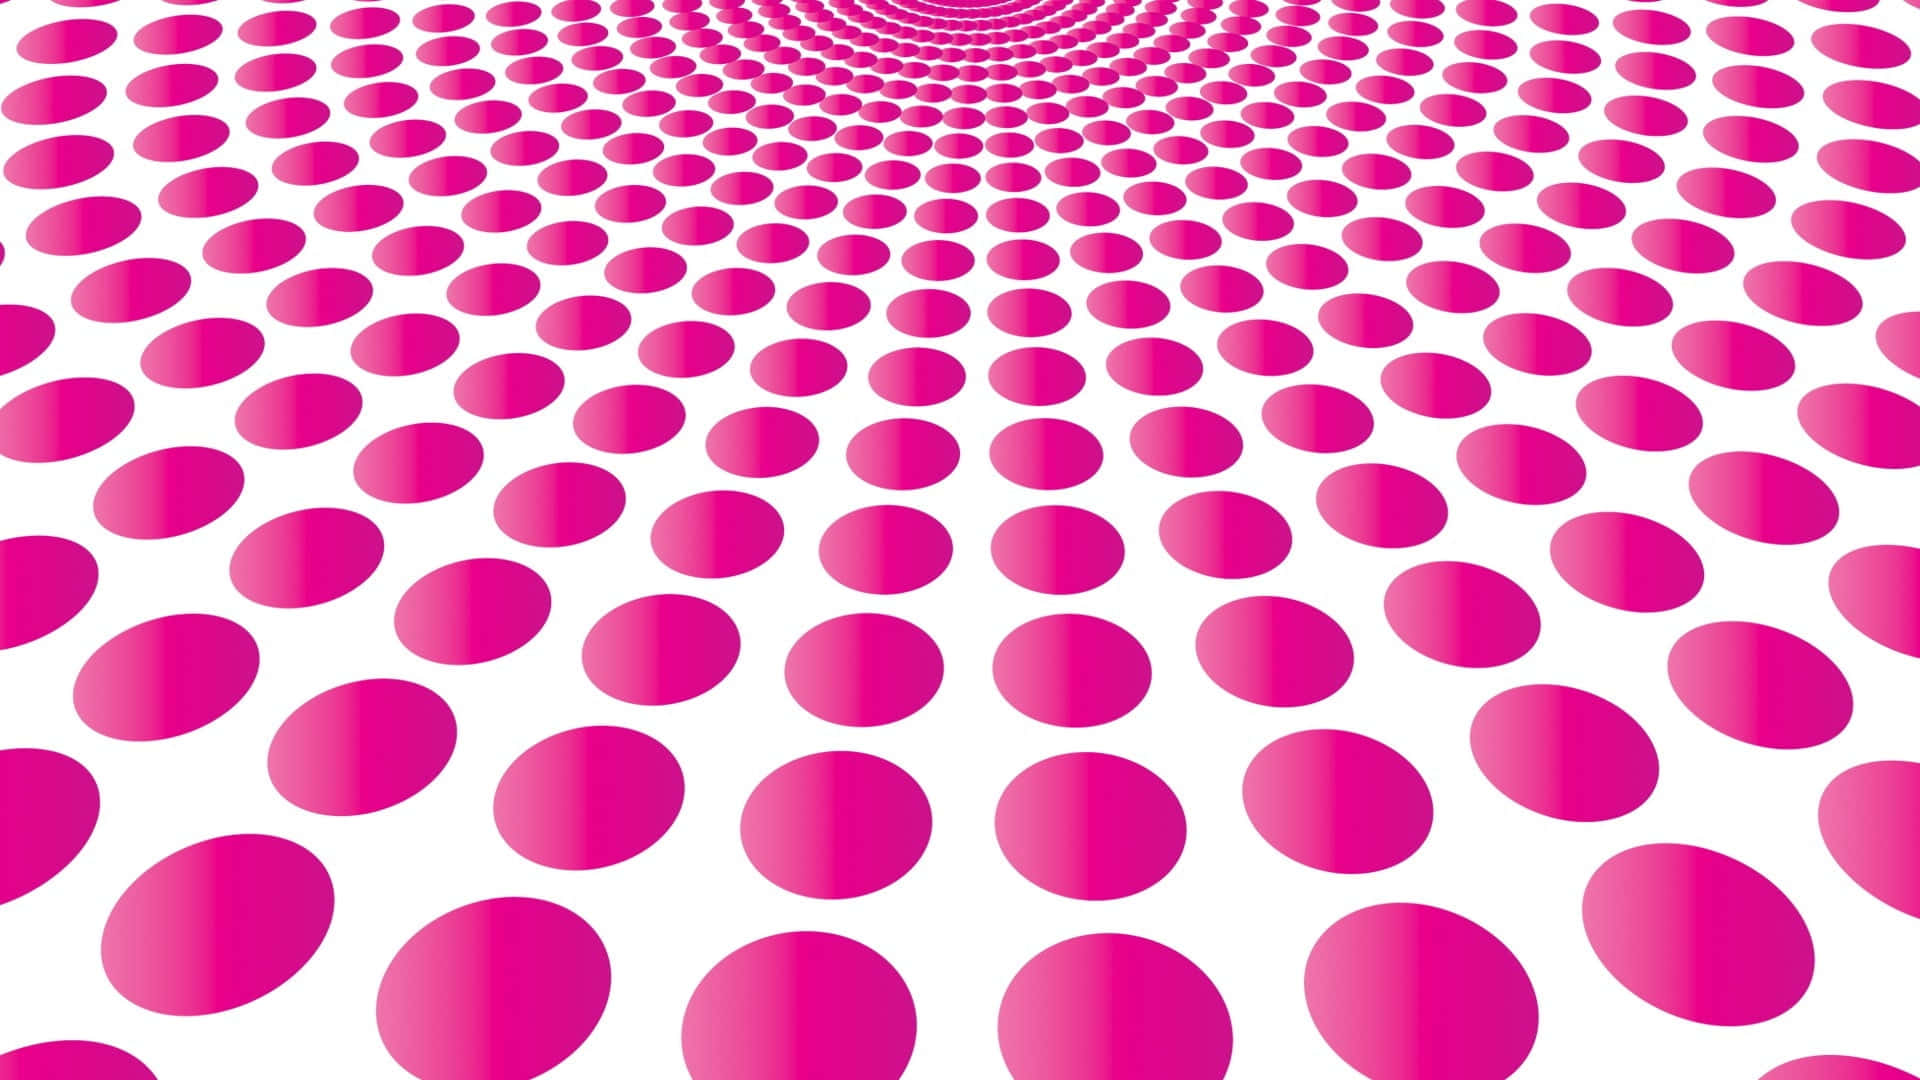 Gorgeous pink polka dot background